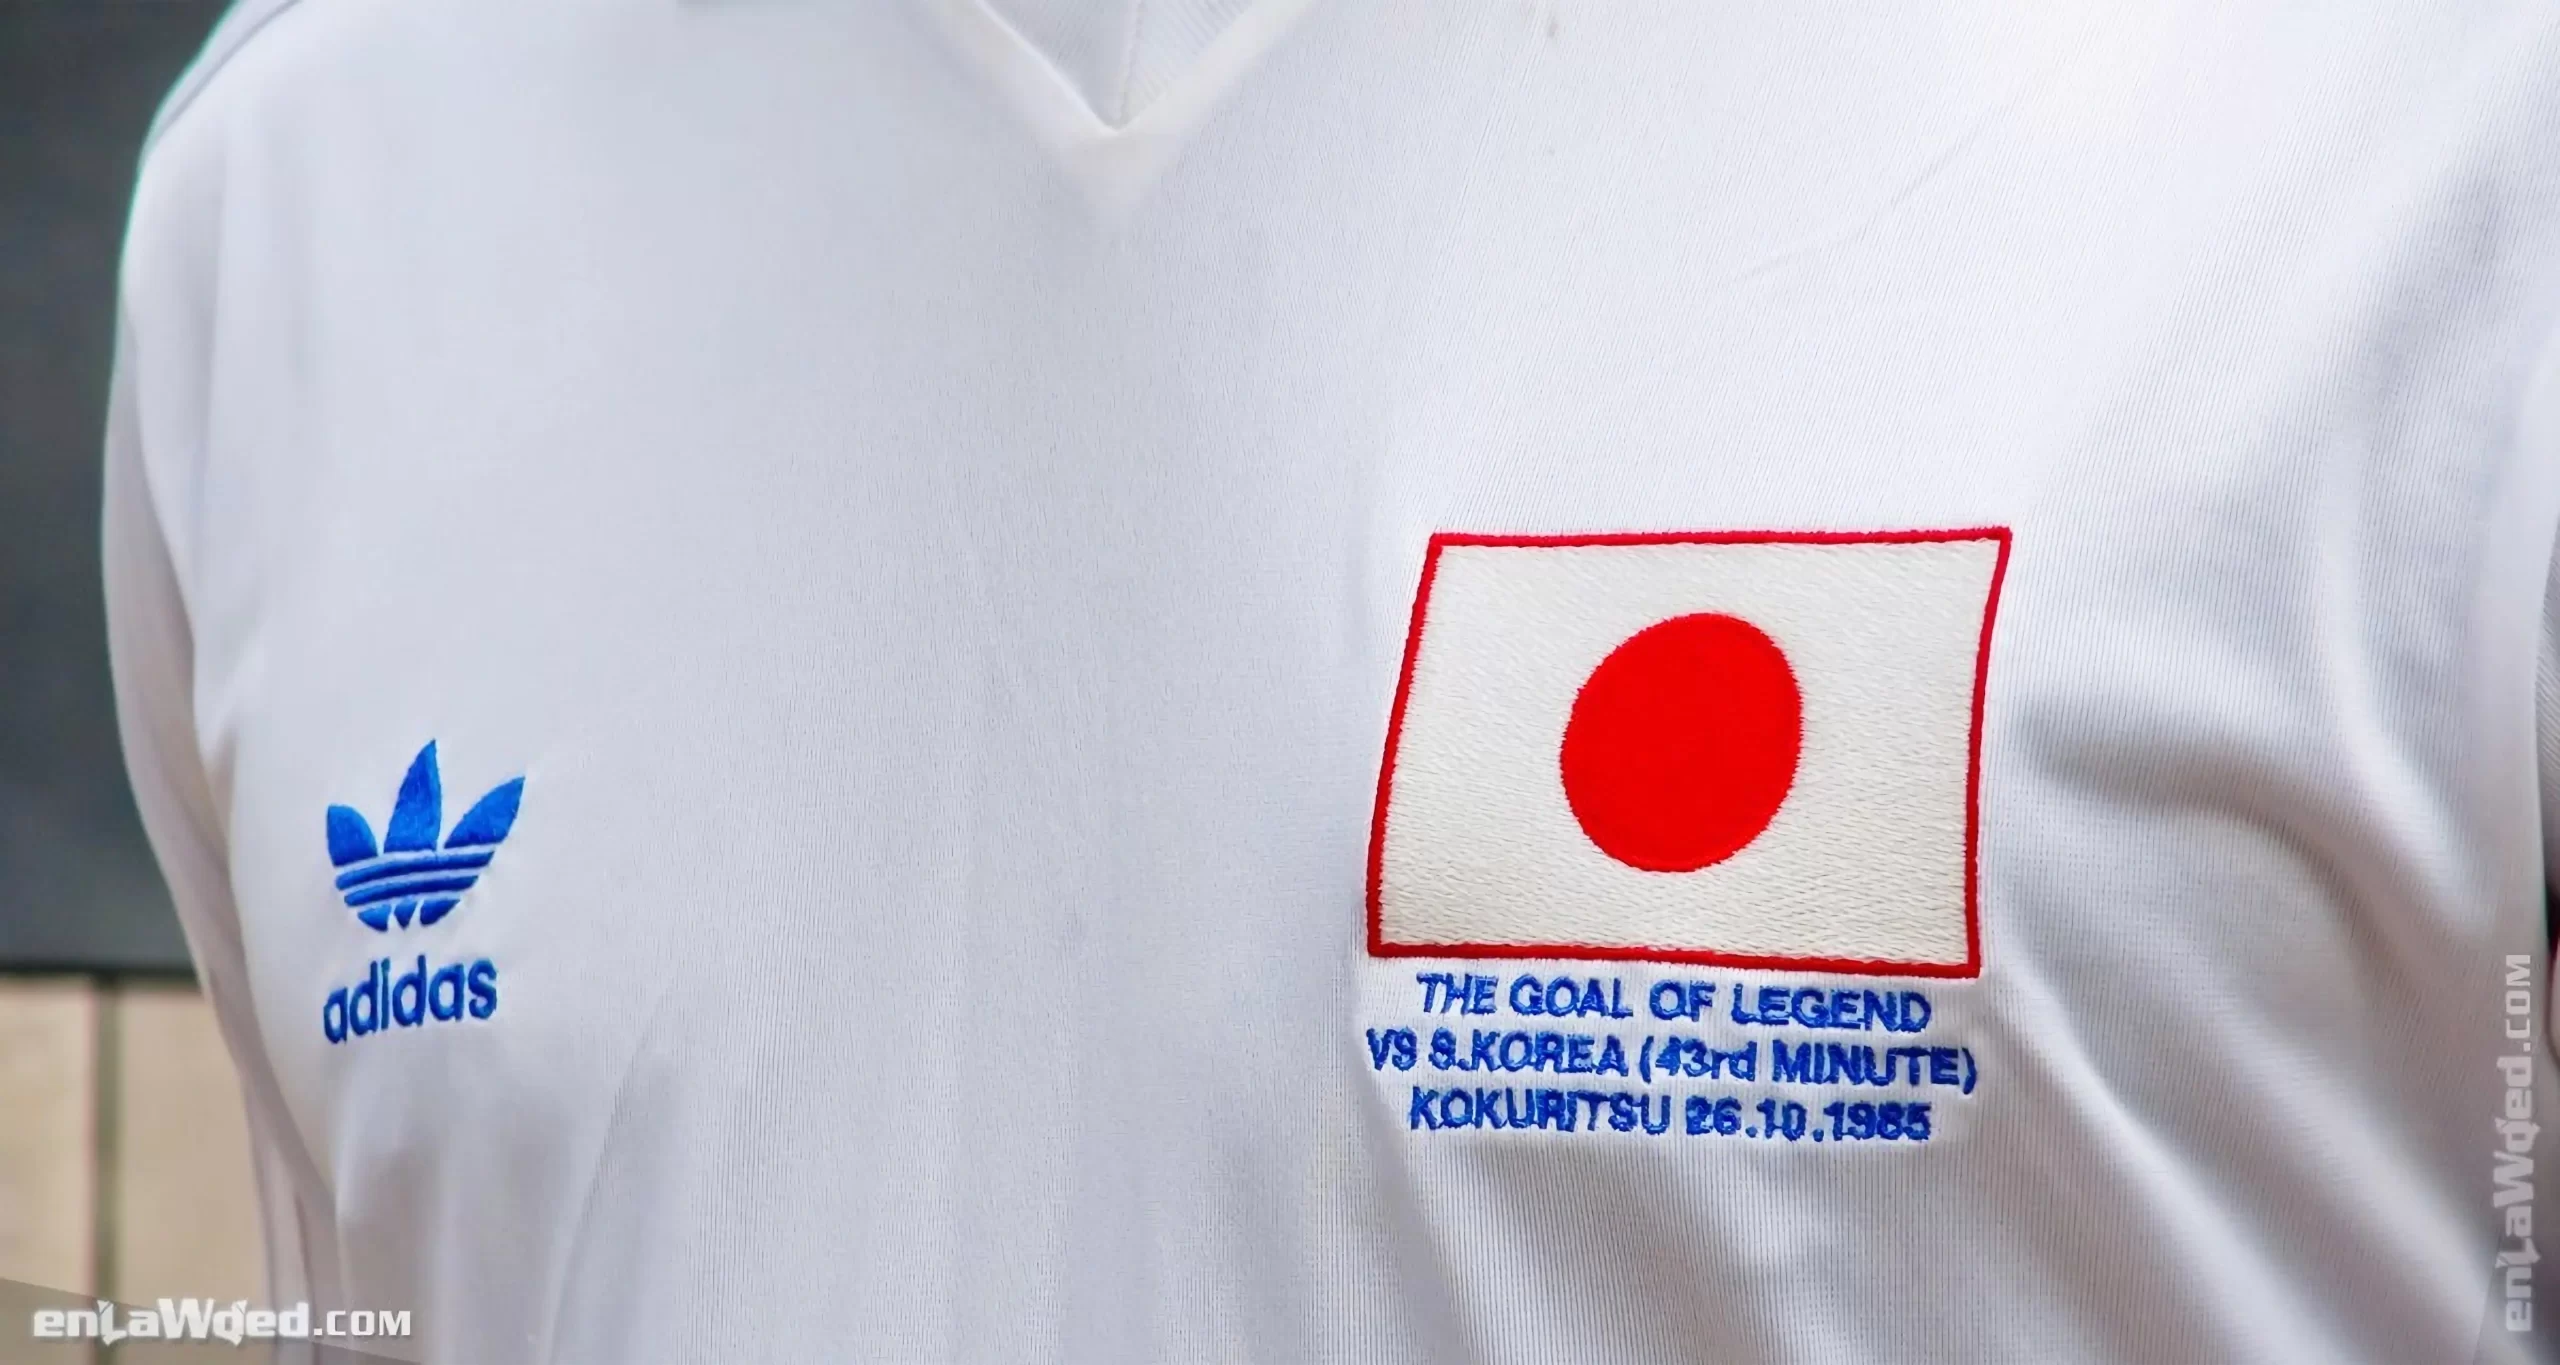 Men’s 2006 Japan ’85 Kimura Jersey by Adidas: Discover (EnLawded.com file #lmc4v2mfngbtvvijltg)